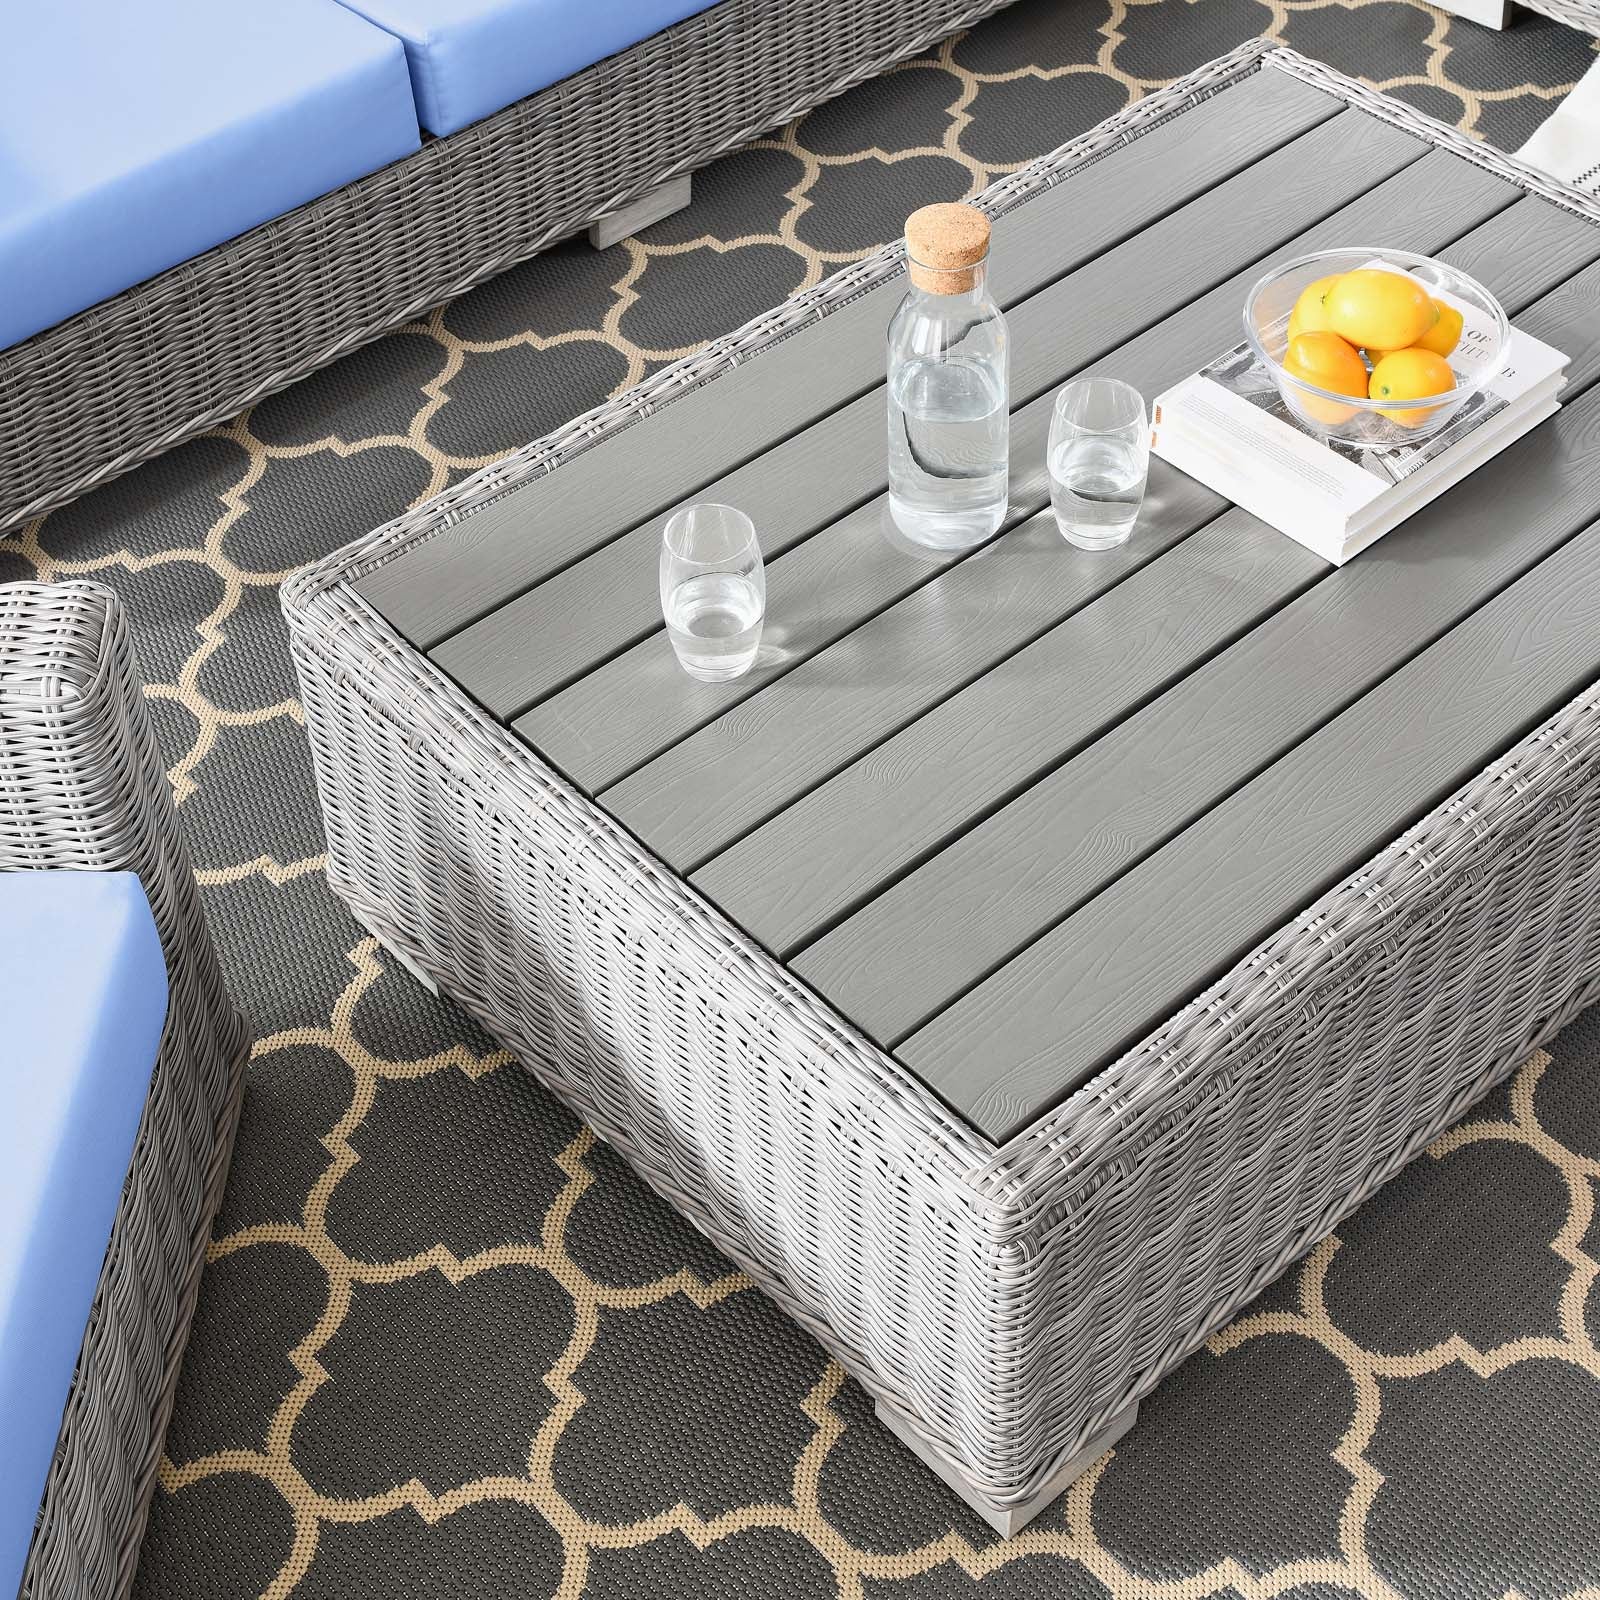 Conway 4-Piece Outdoor Patio Wicker Rattan Furniture Set